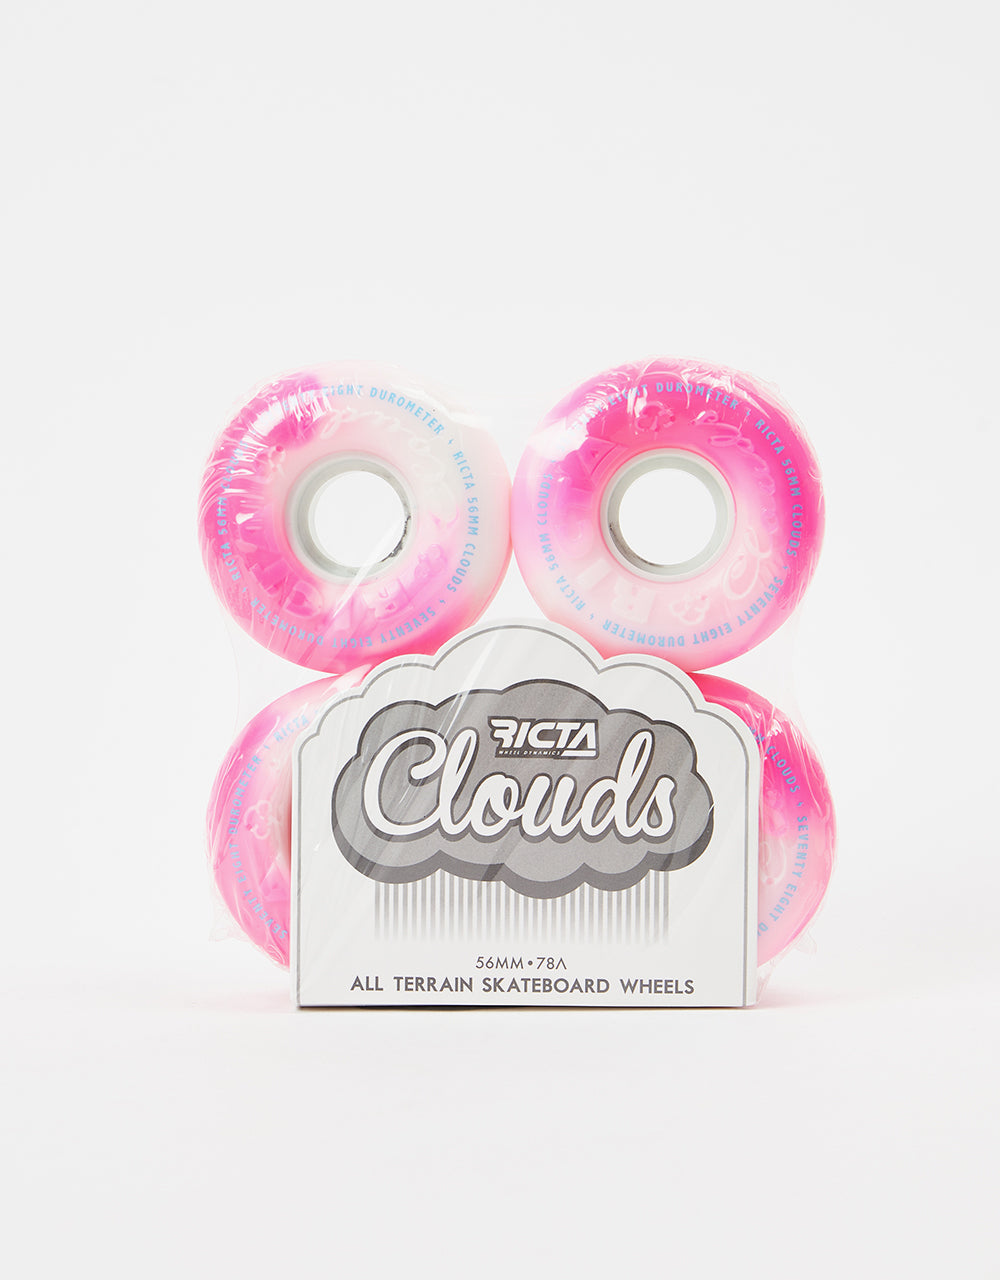 Ricta Clouds Swirls 78a Skateboard Wheels - 56mm